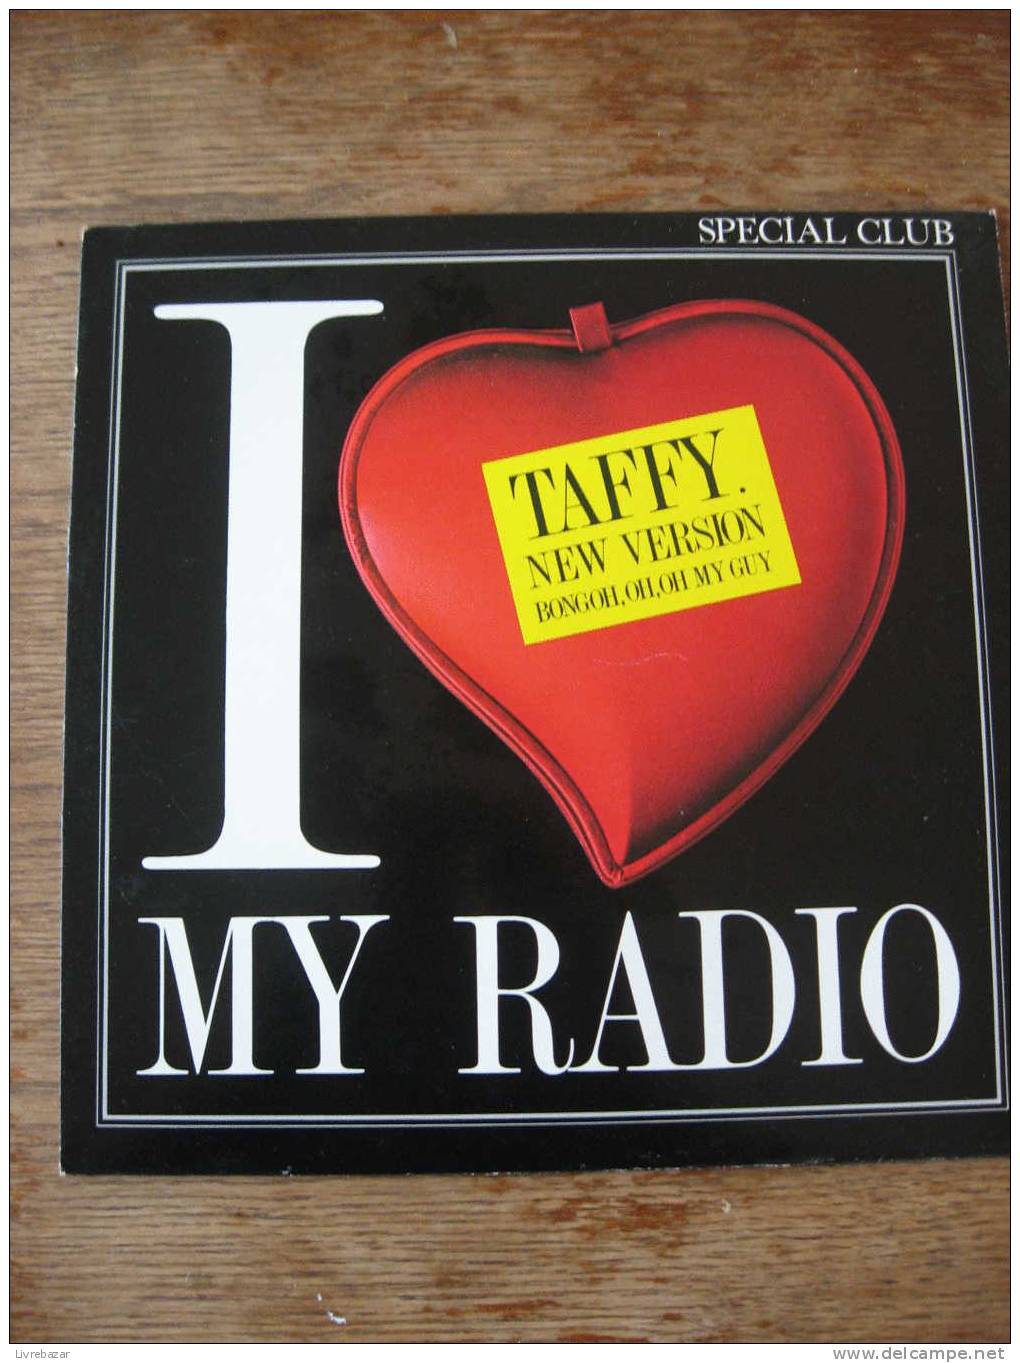 I LOVE MY RADIO TAFFY NEW VERSION SPECIAL CLUB - 45 Rpm - Maxi-Singles